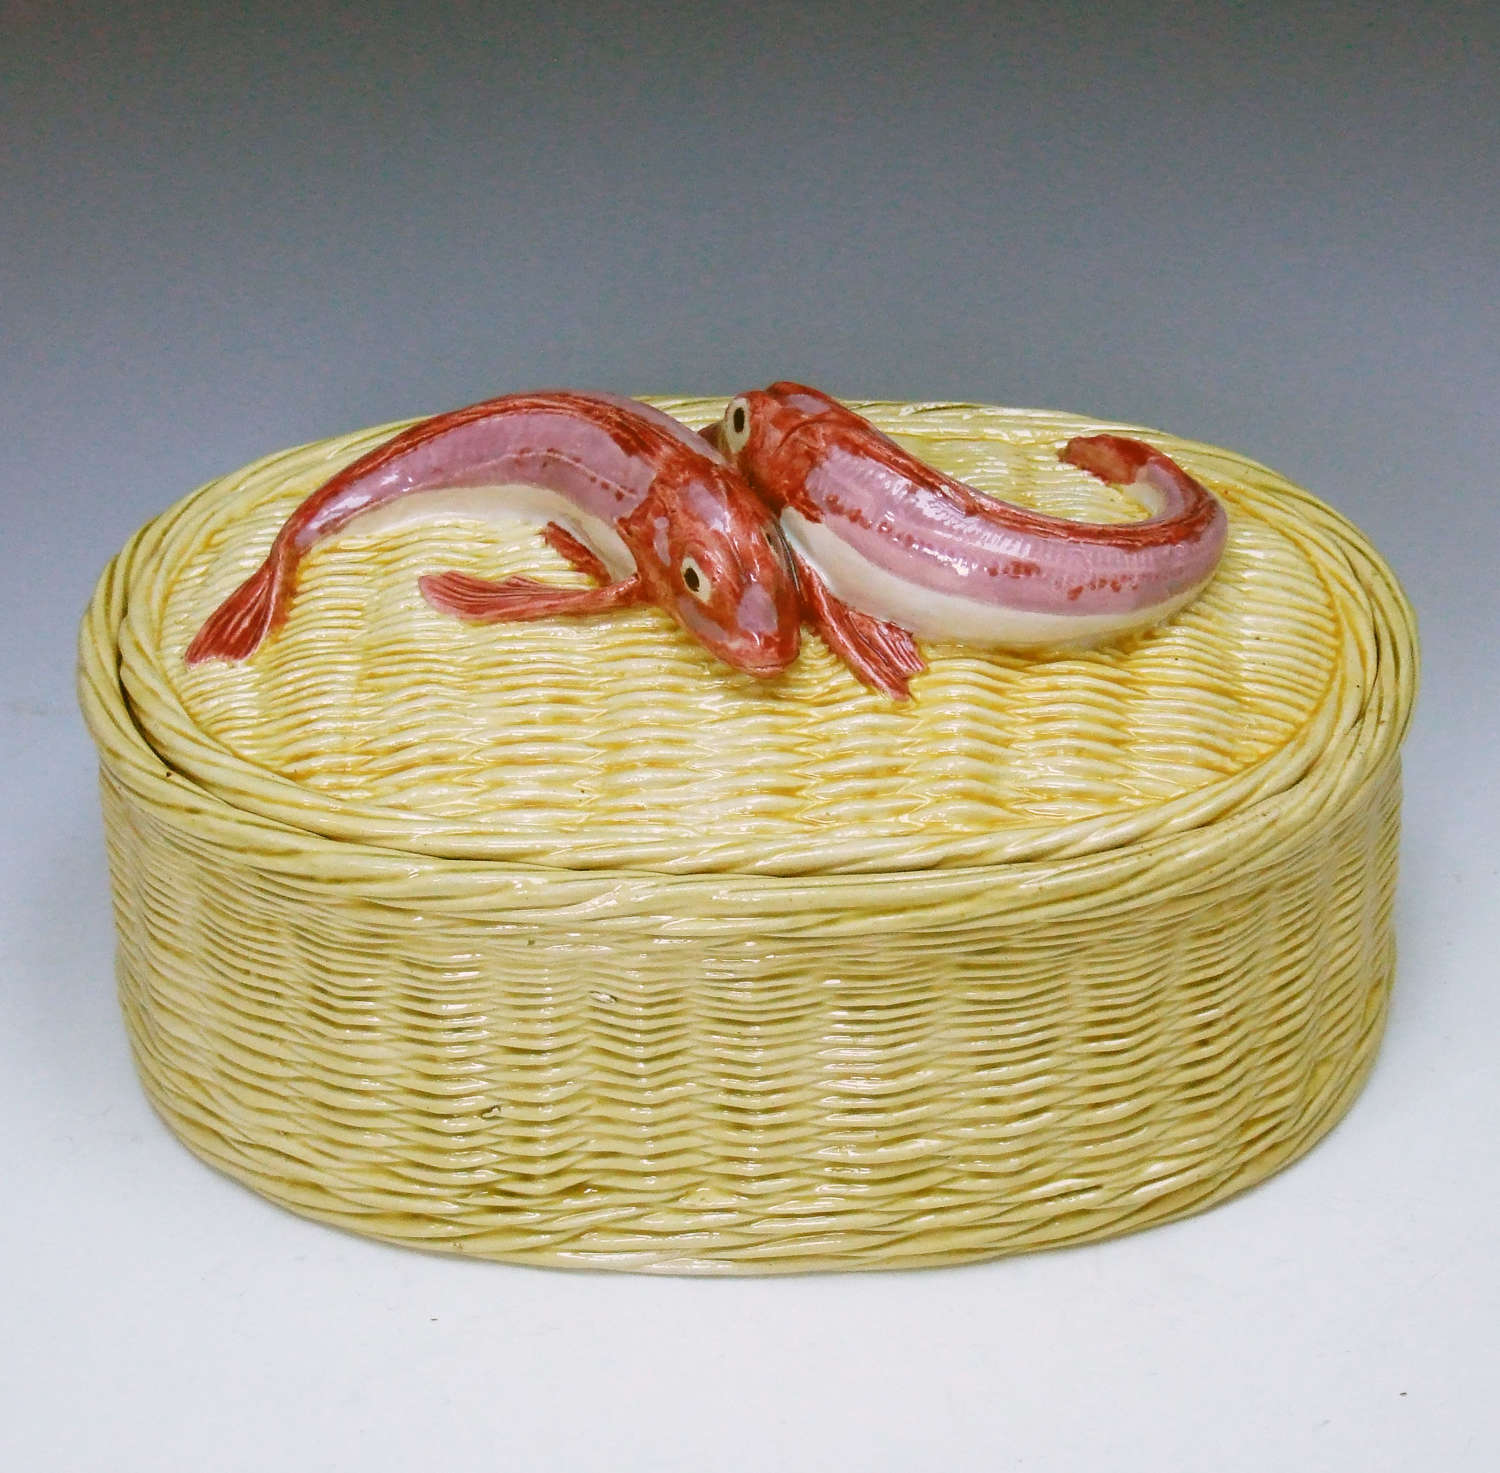 Very rare & unusual large fish basket motif box & cover